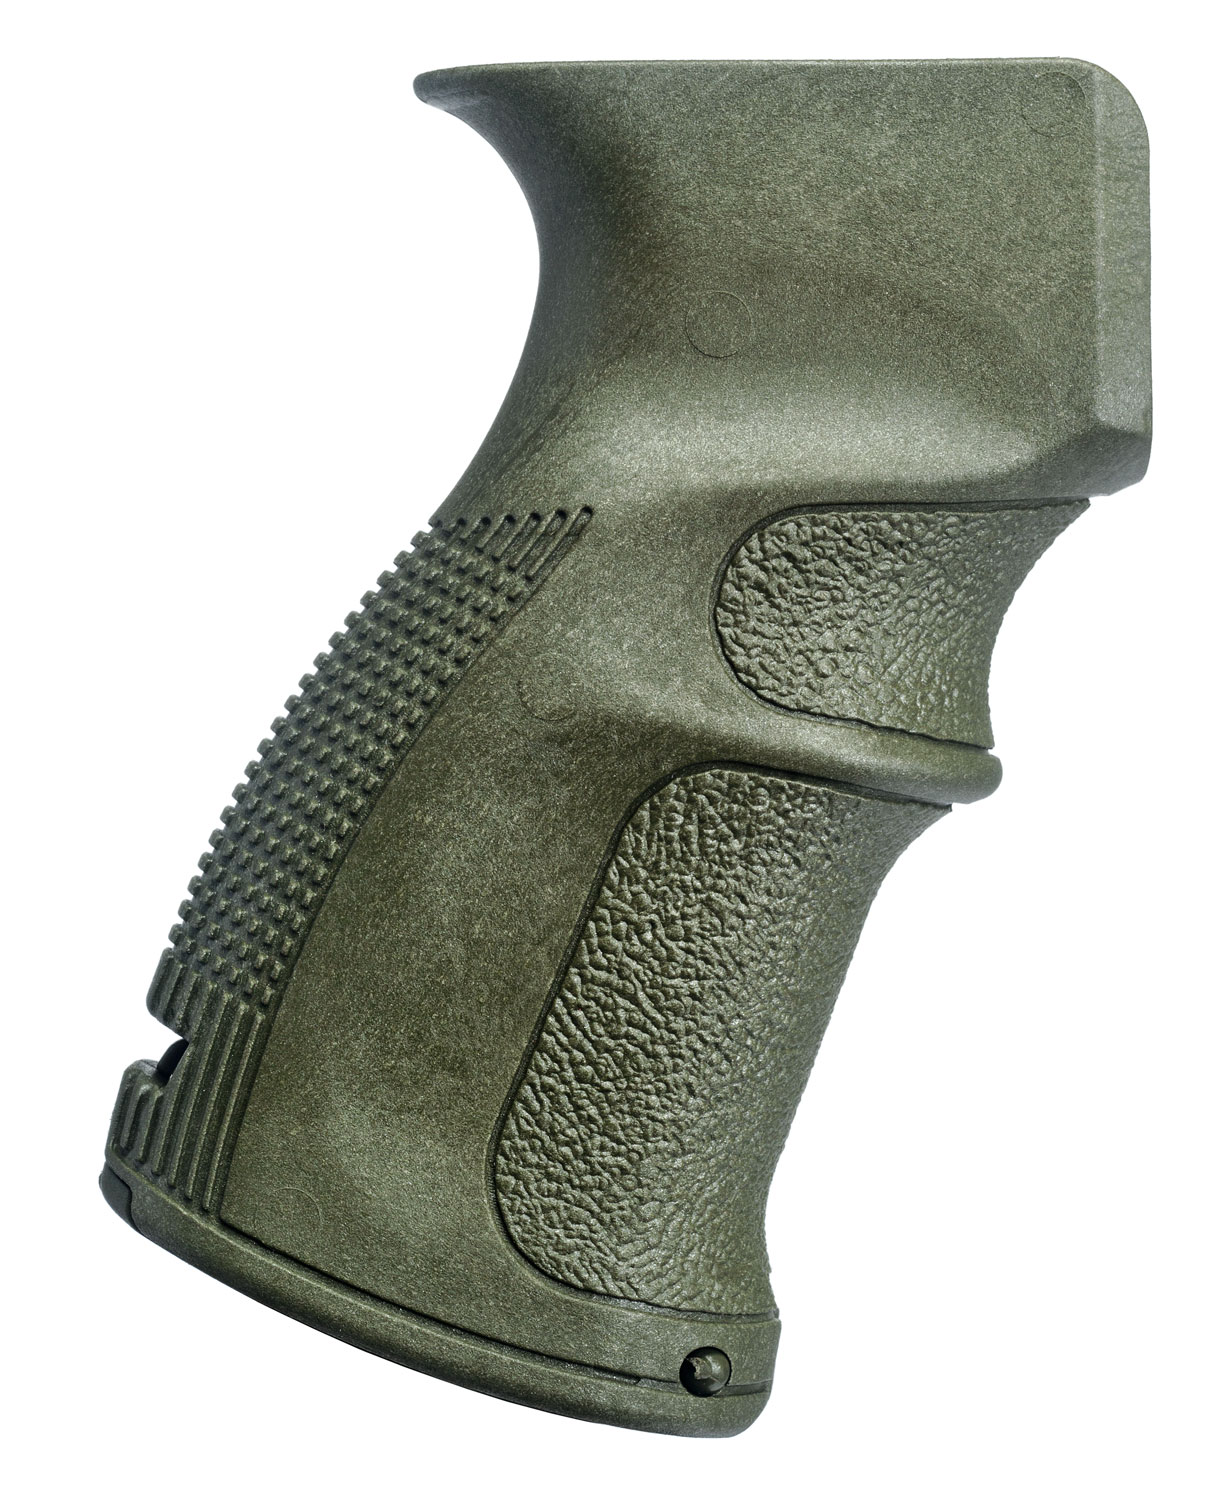 FAB DEFENSE (USIQ) FX-AG47G AG-47 Ergonomic 
Pistol Grip AK-47/74 Polymer OD Green